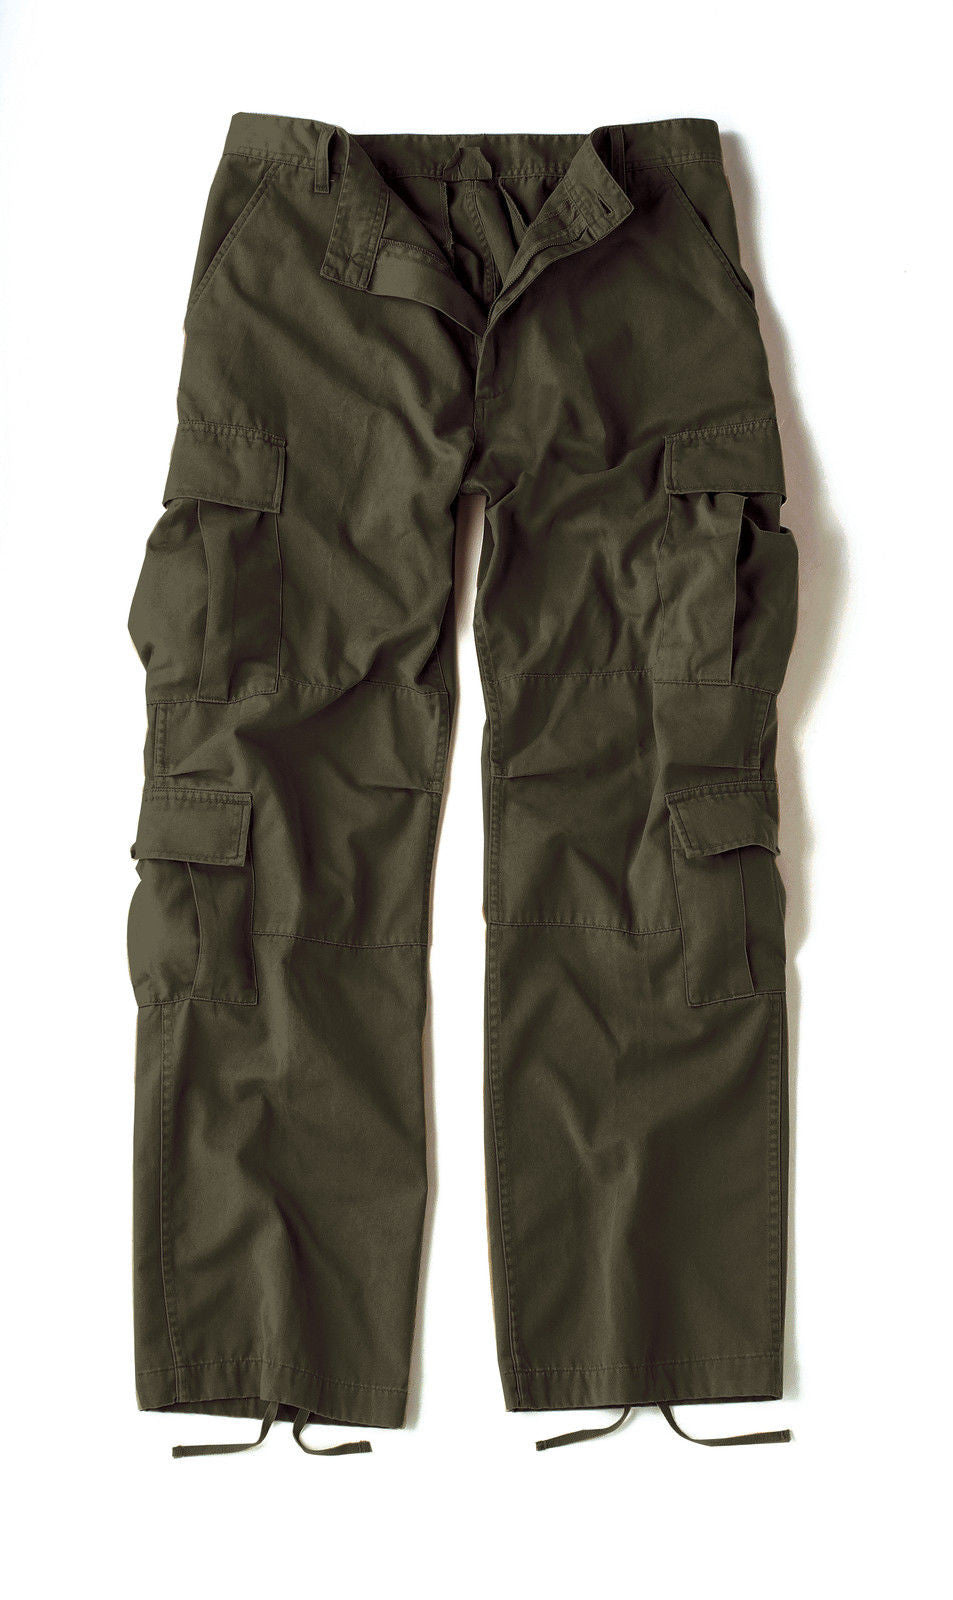 Vintage Olive Drab Paratrooper Cargo Pants BDU